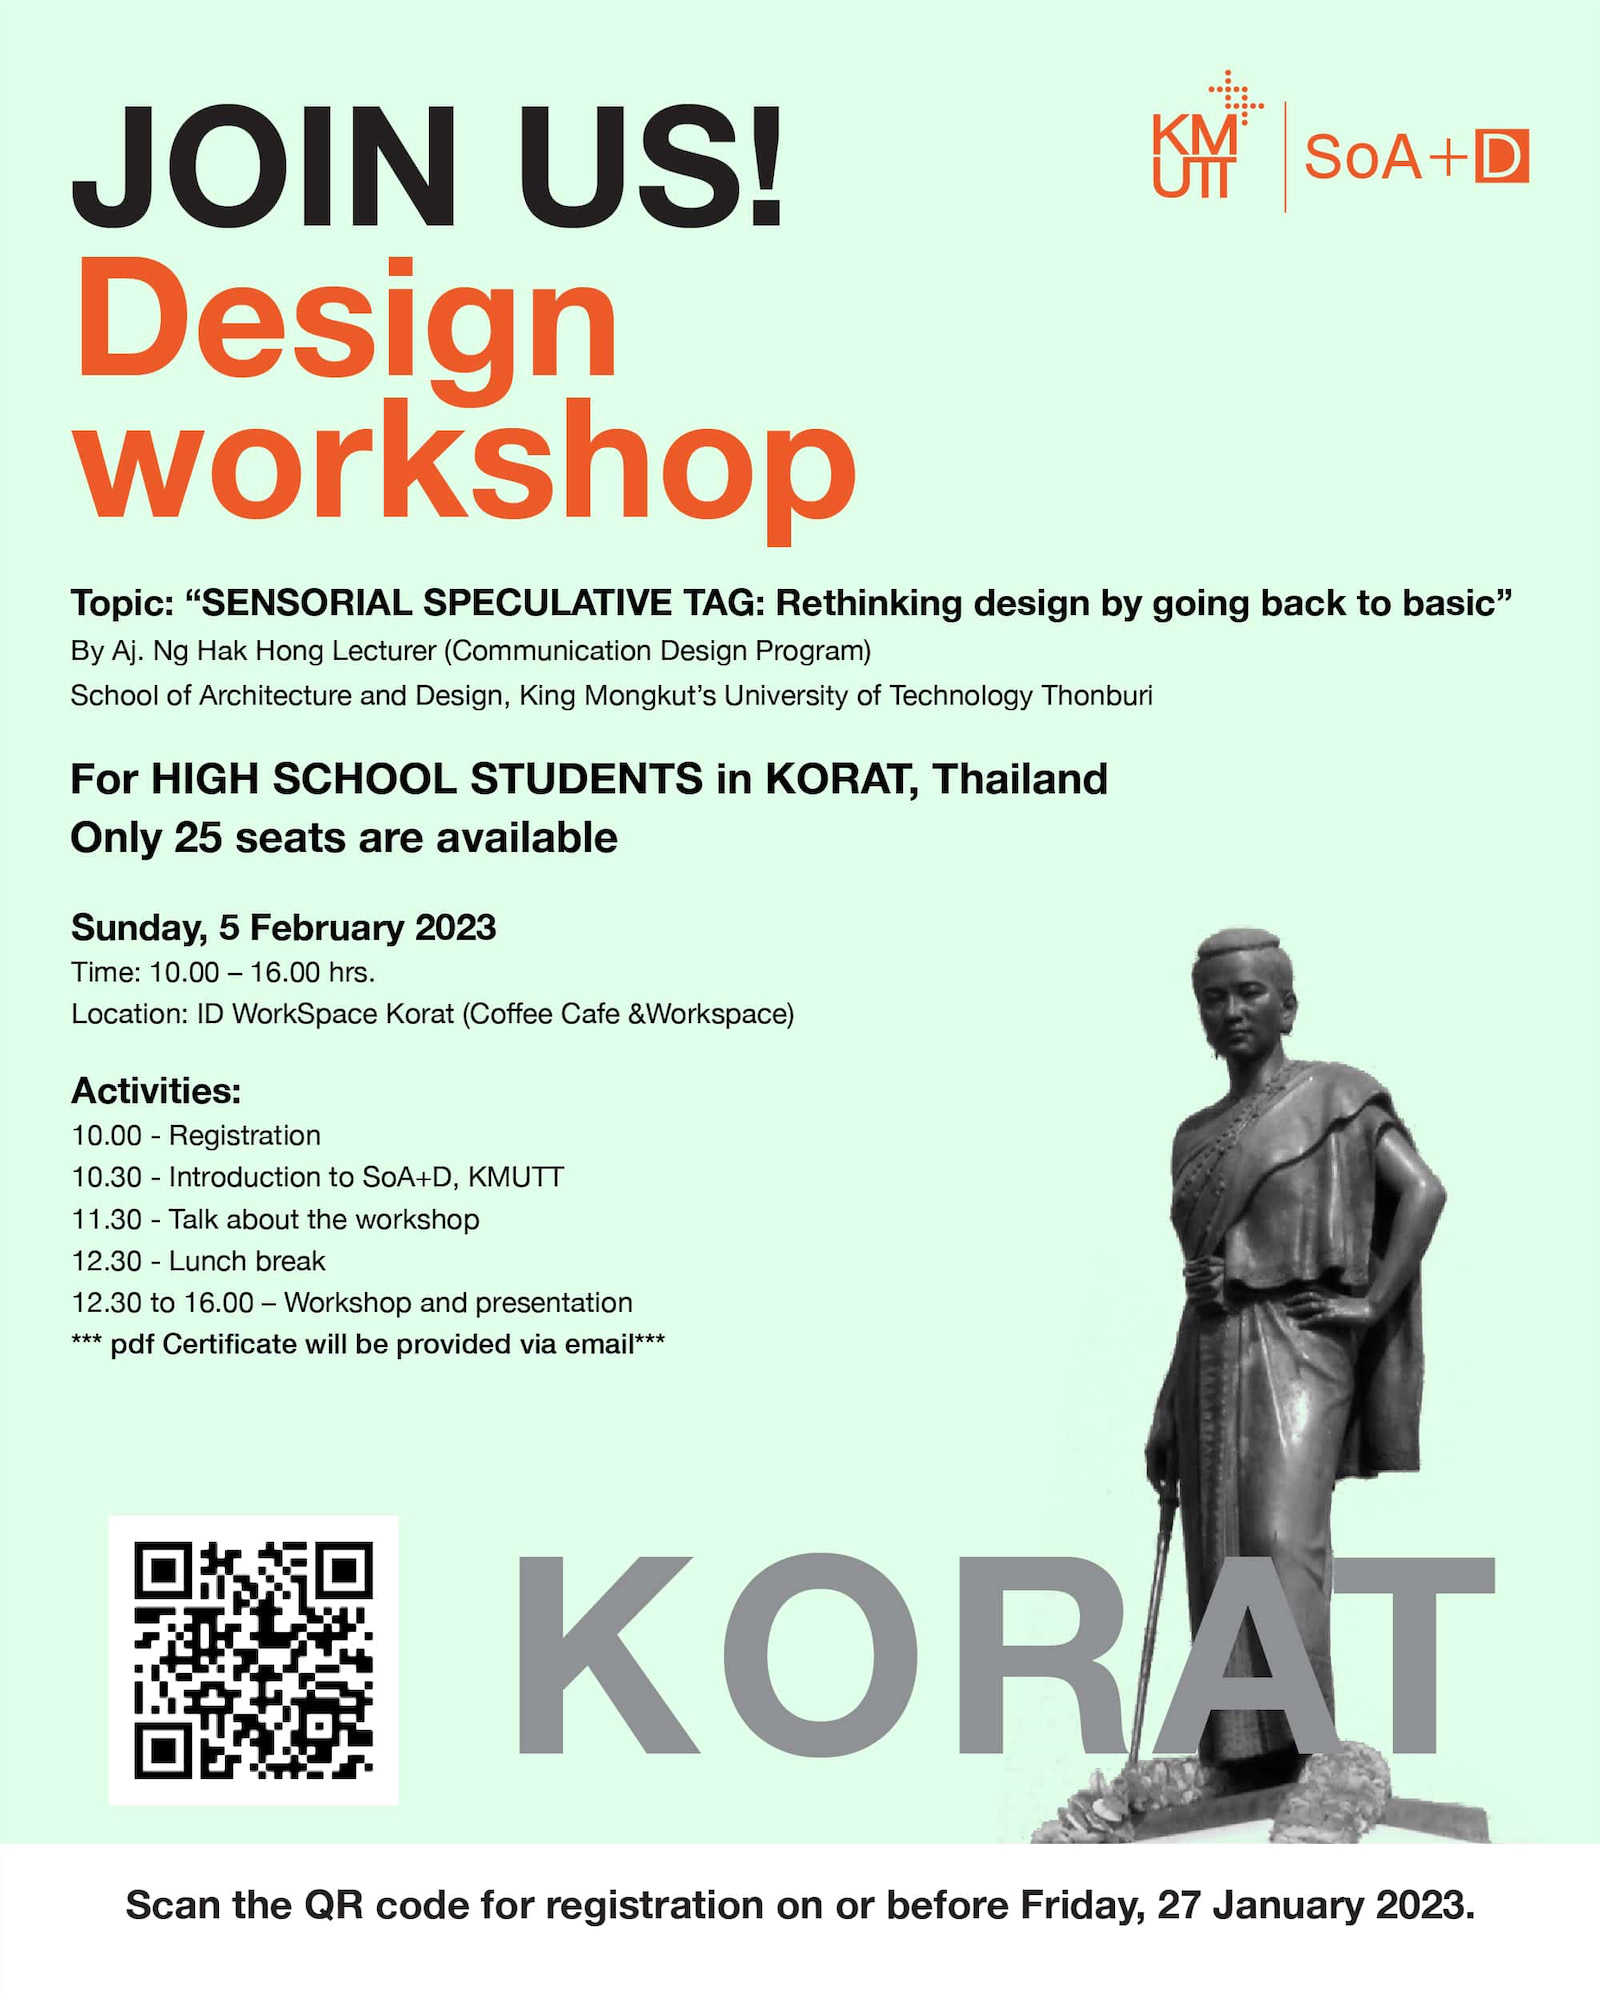 UPCOMING DESIGN WORKSHOP for HIGH SCHOOL STUDENTS in KORAT